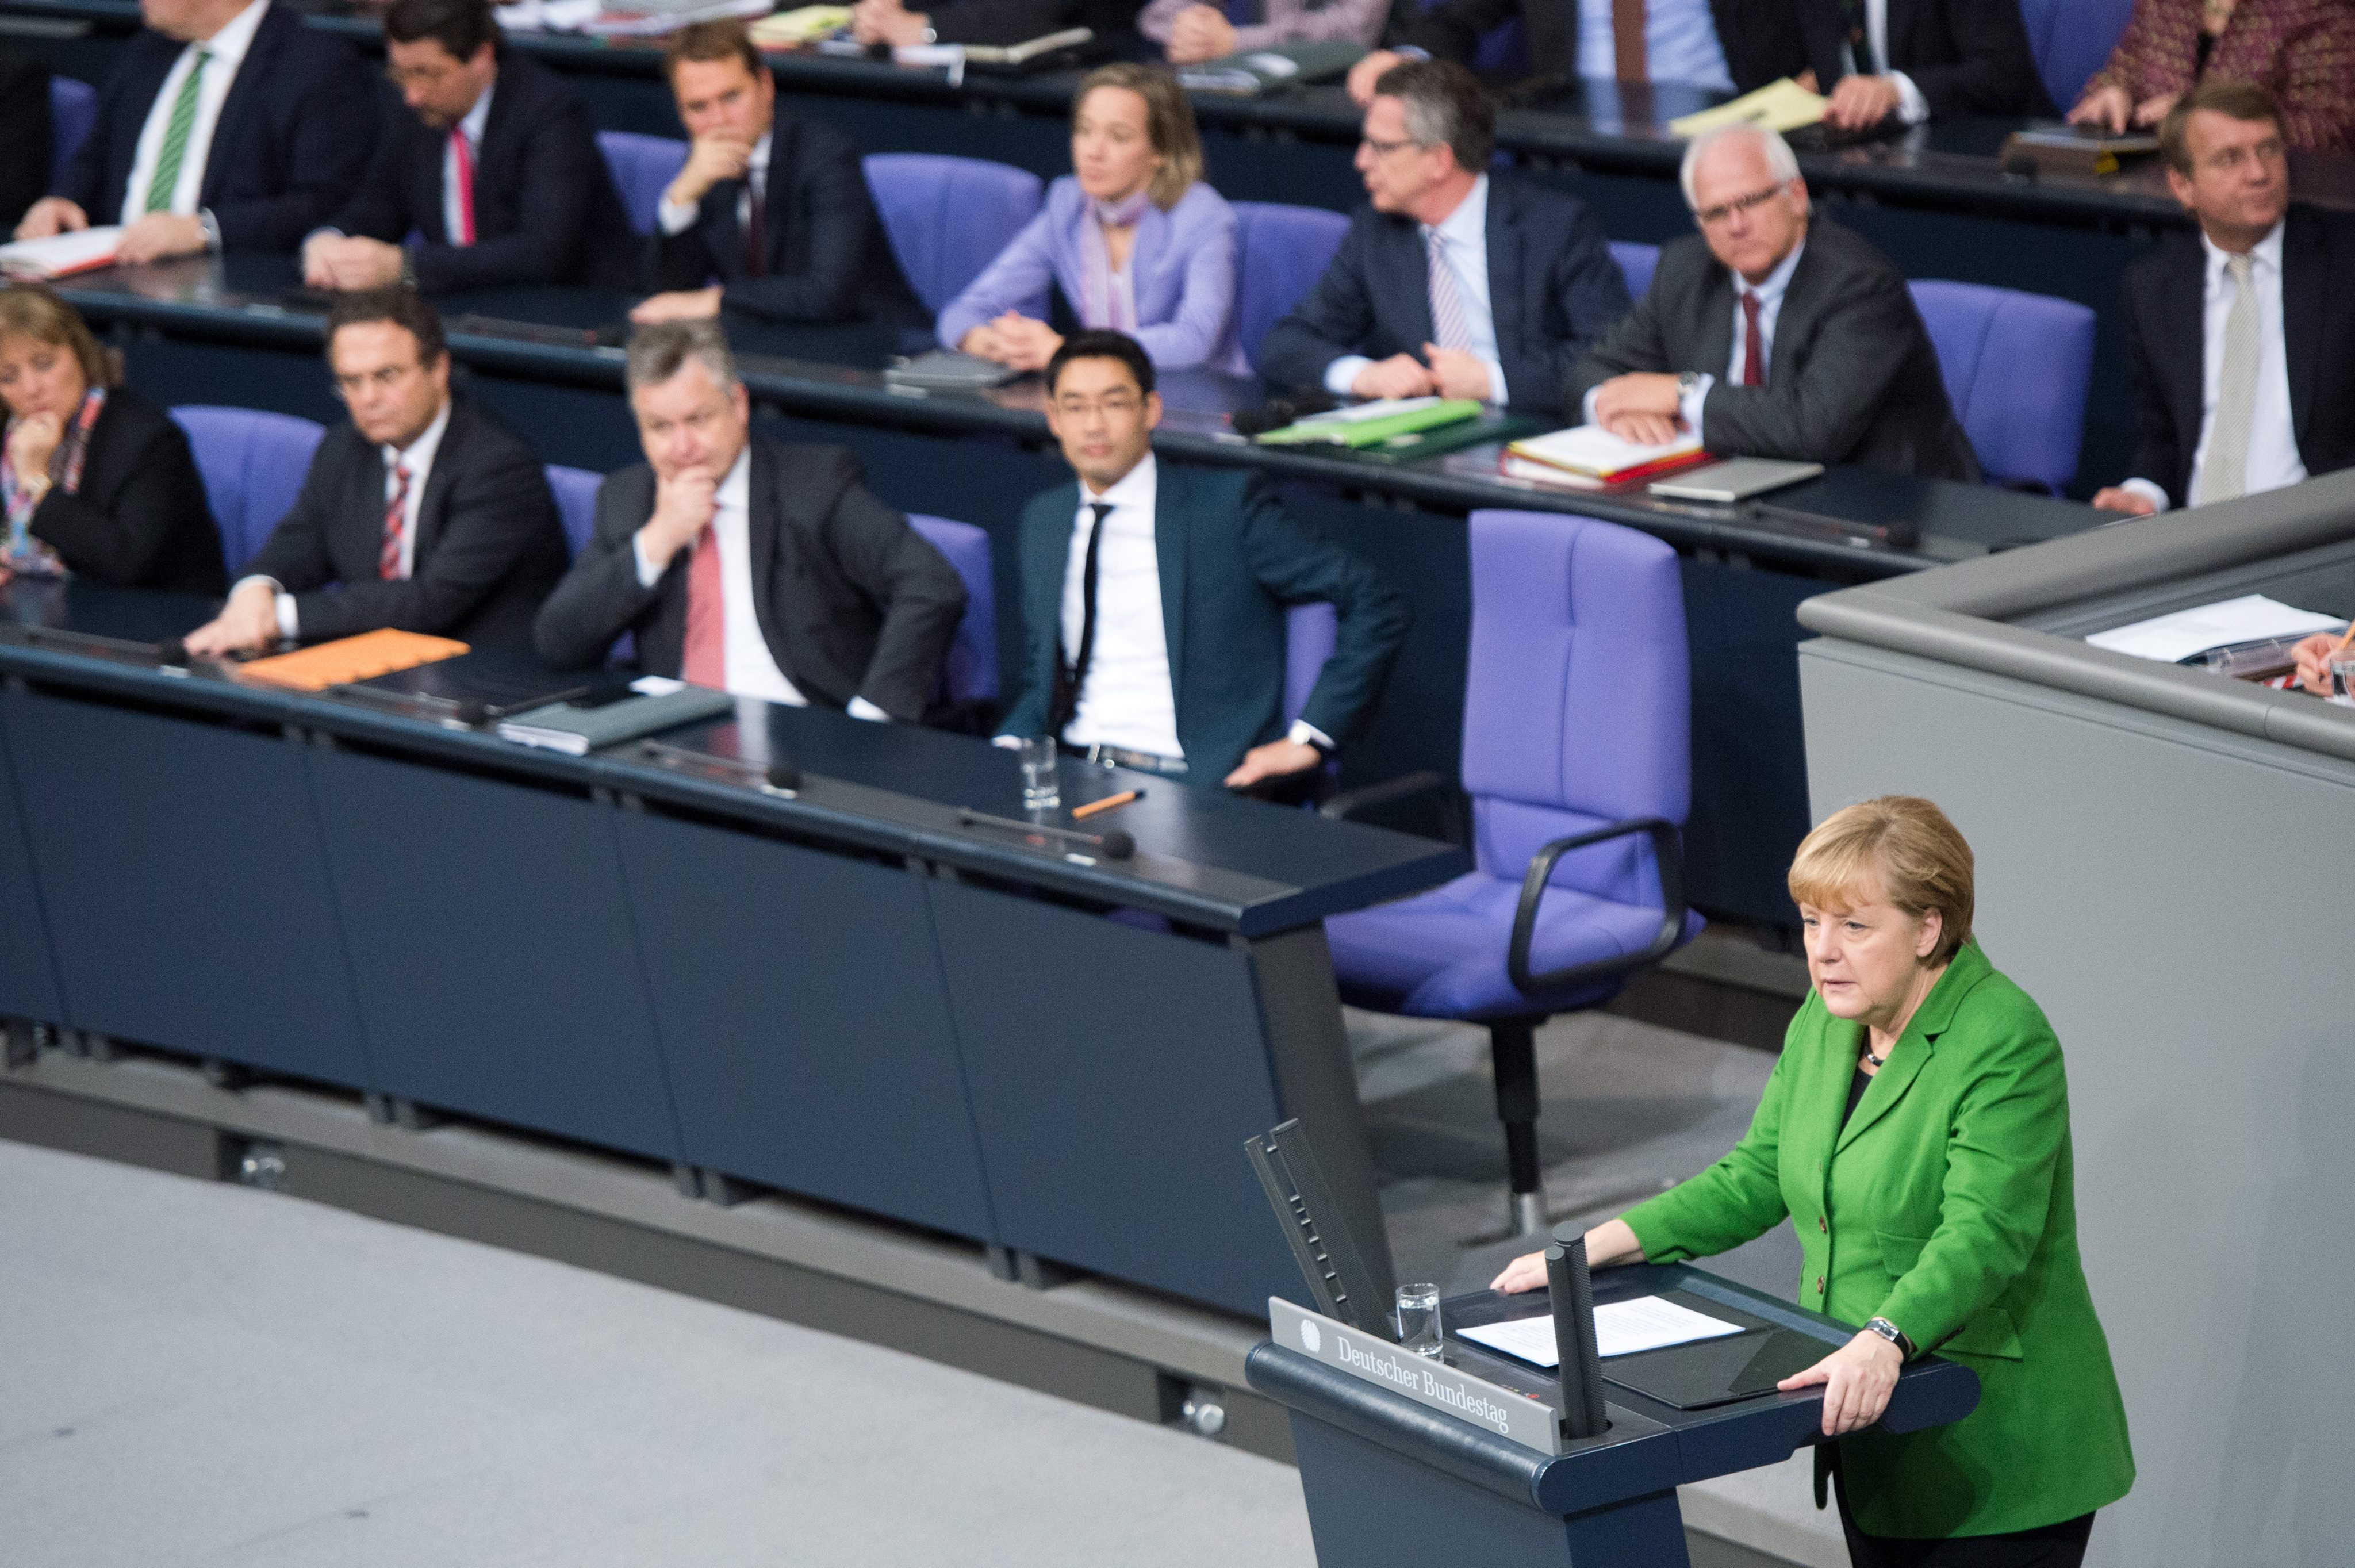 Bundestag: Η θέση της Ελλάδας είναι στην ευρωζώνη, επιμένει η Μέρκελ